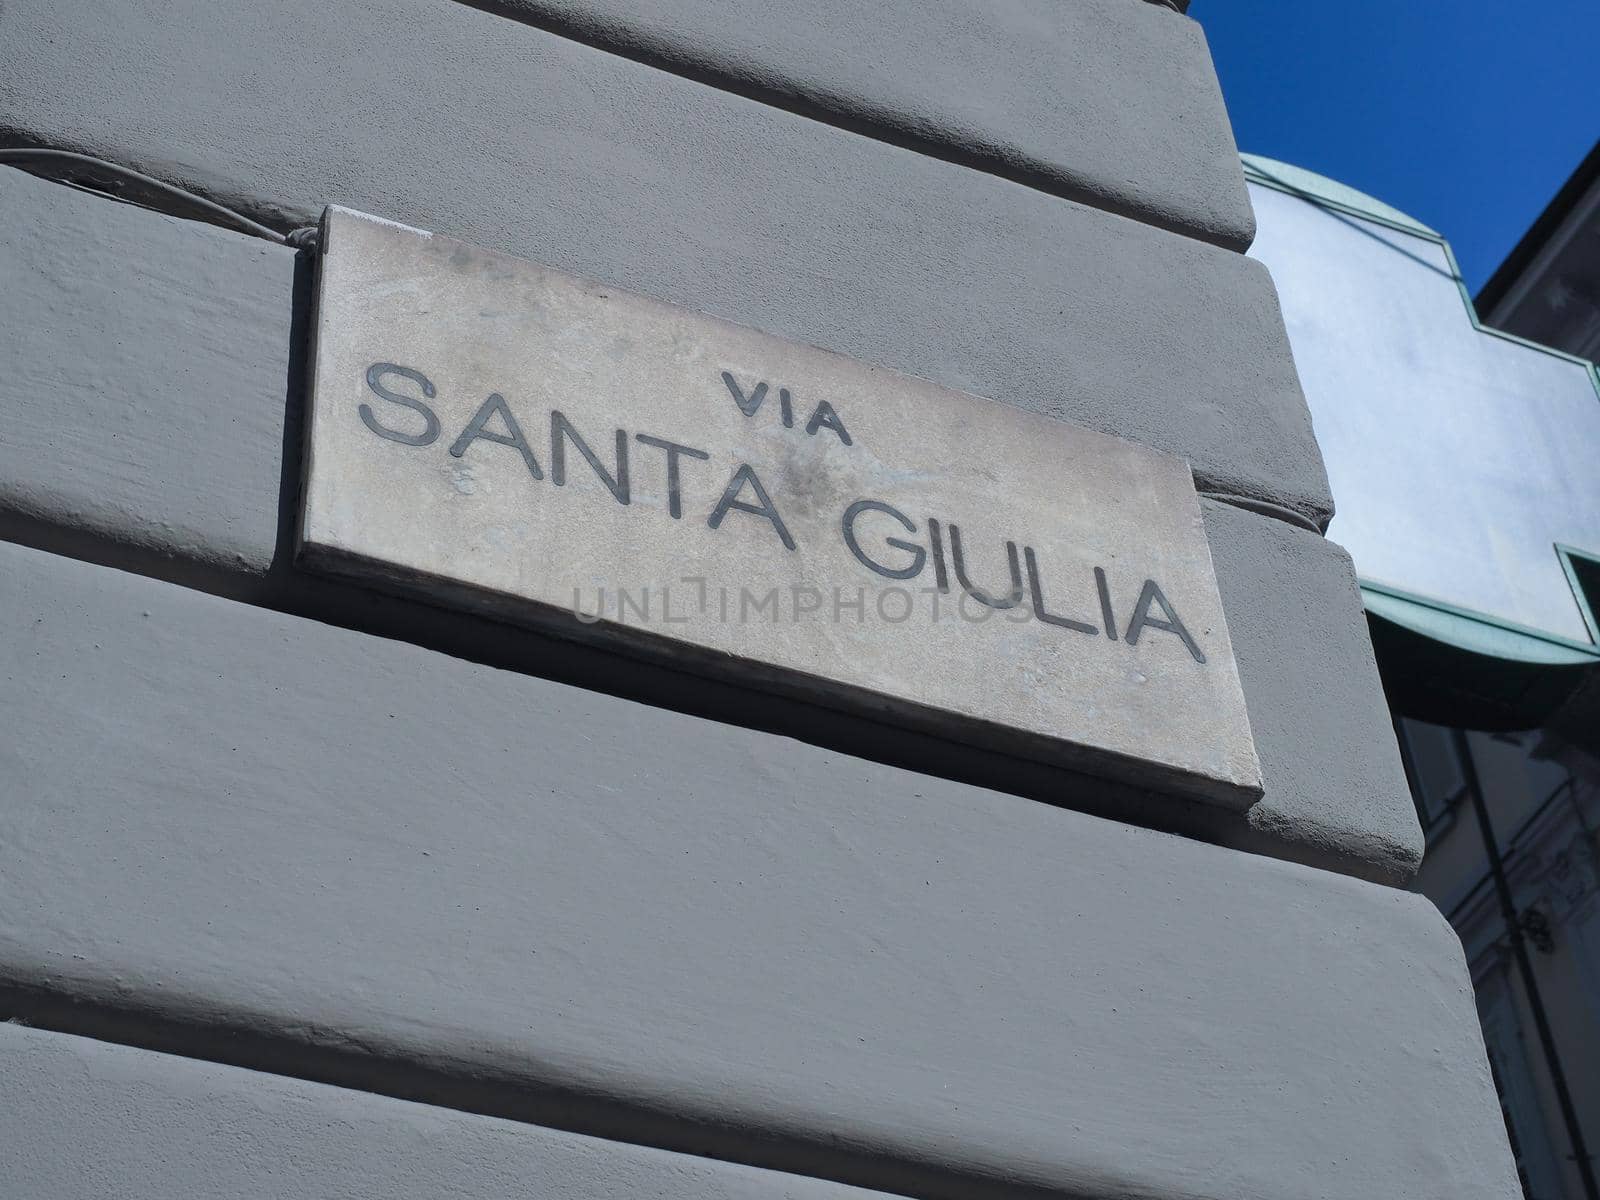 Via Santa Giulia street sign by claudiodivizia